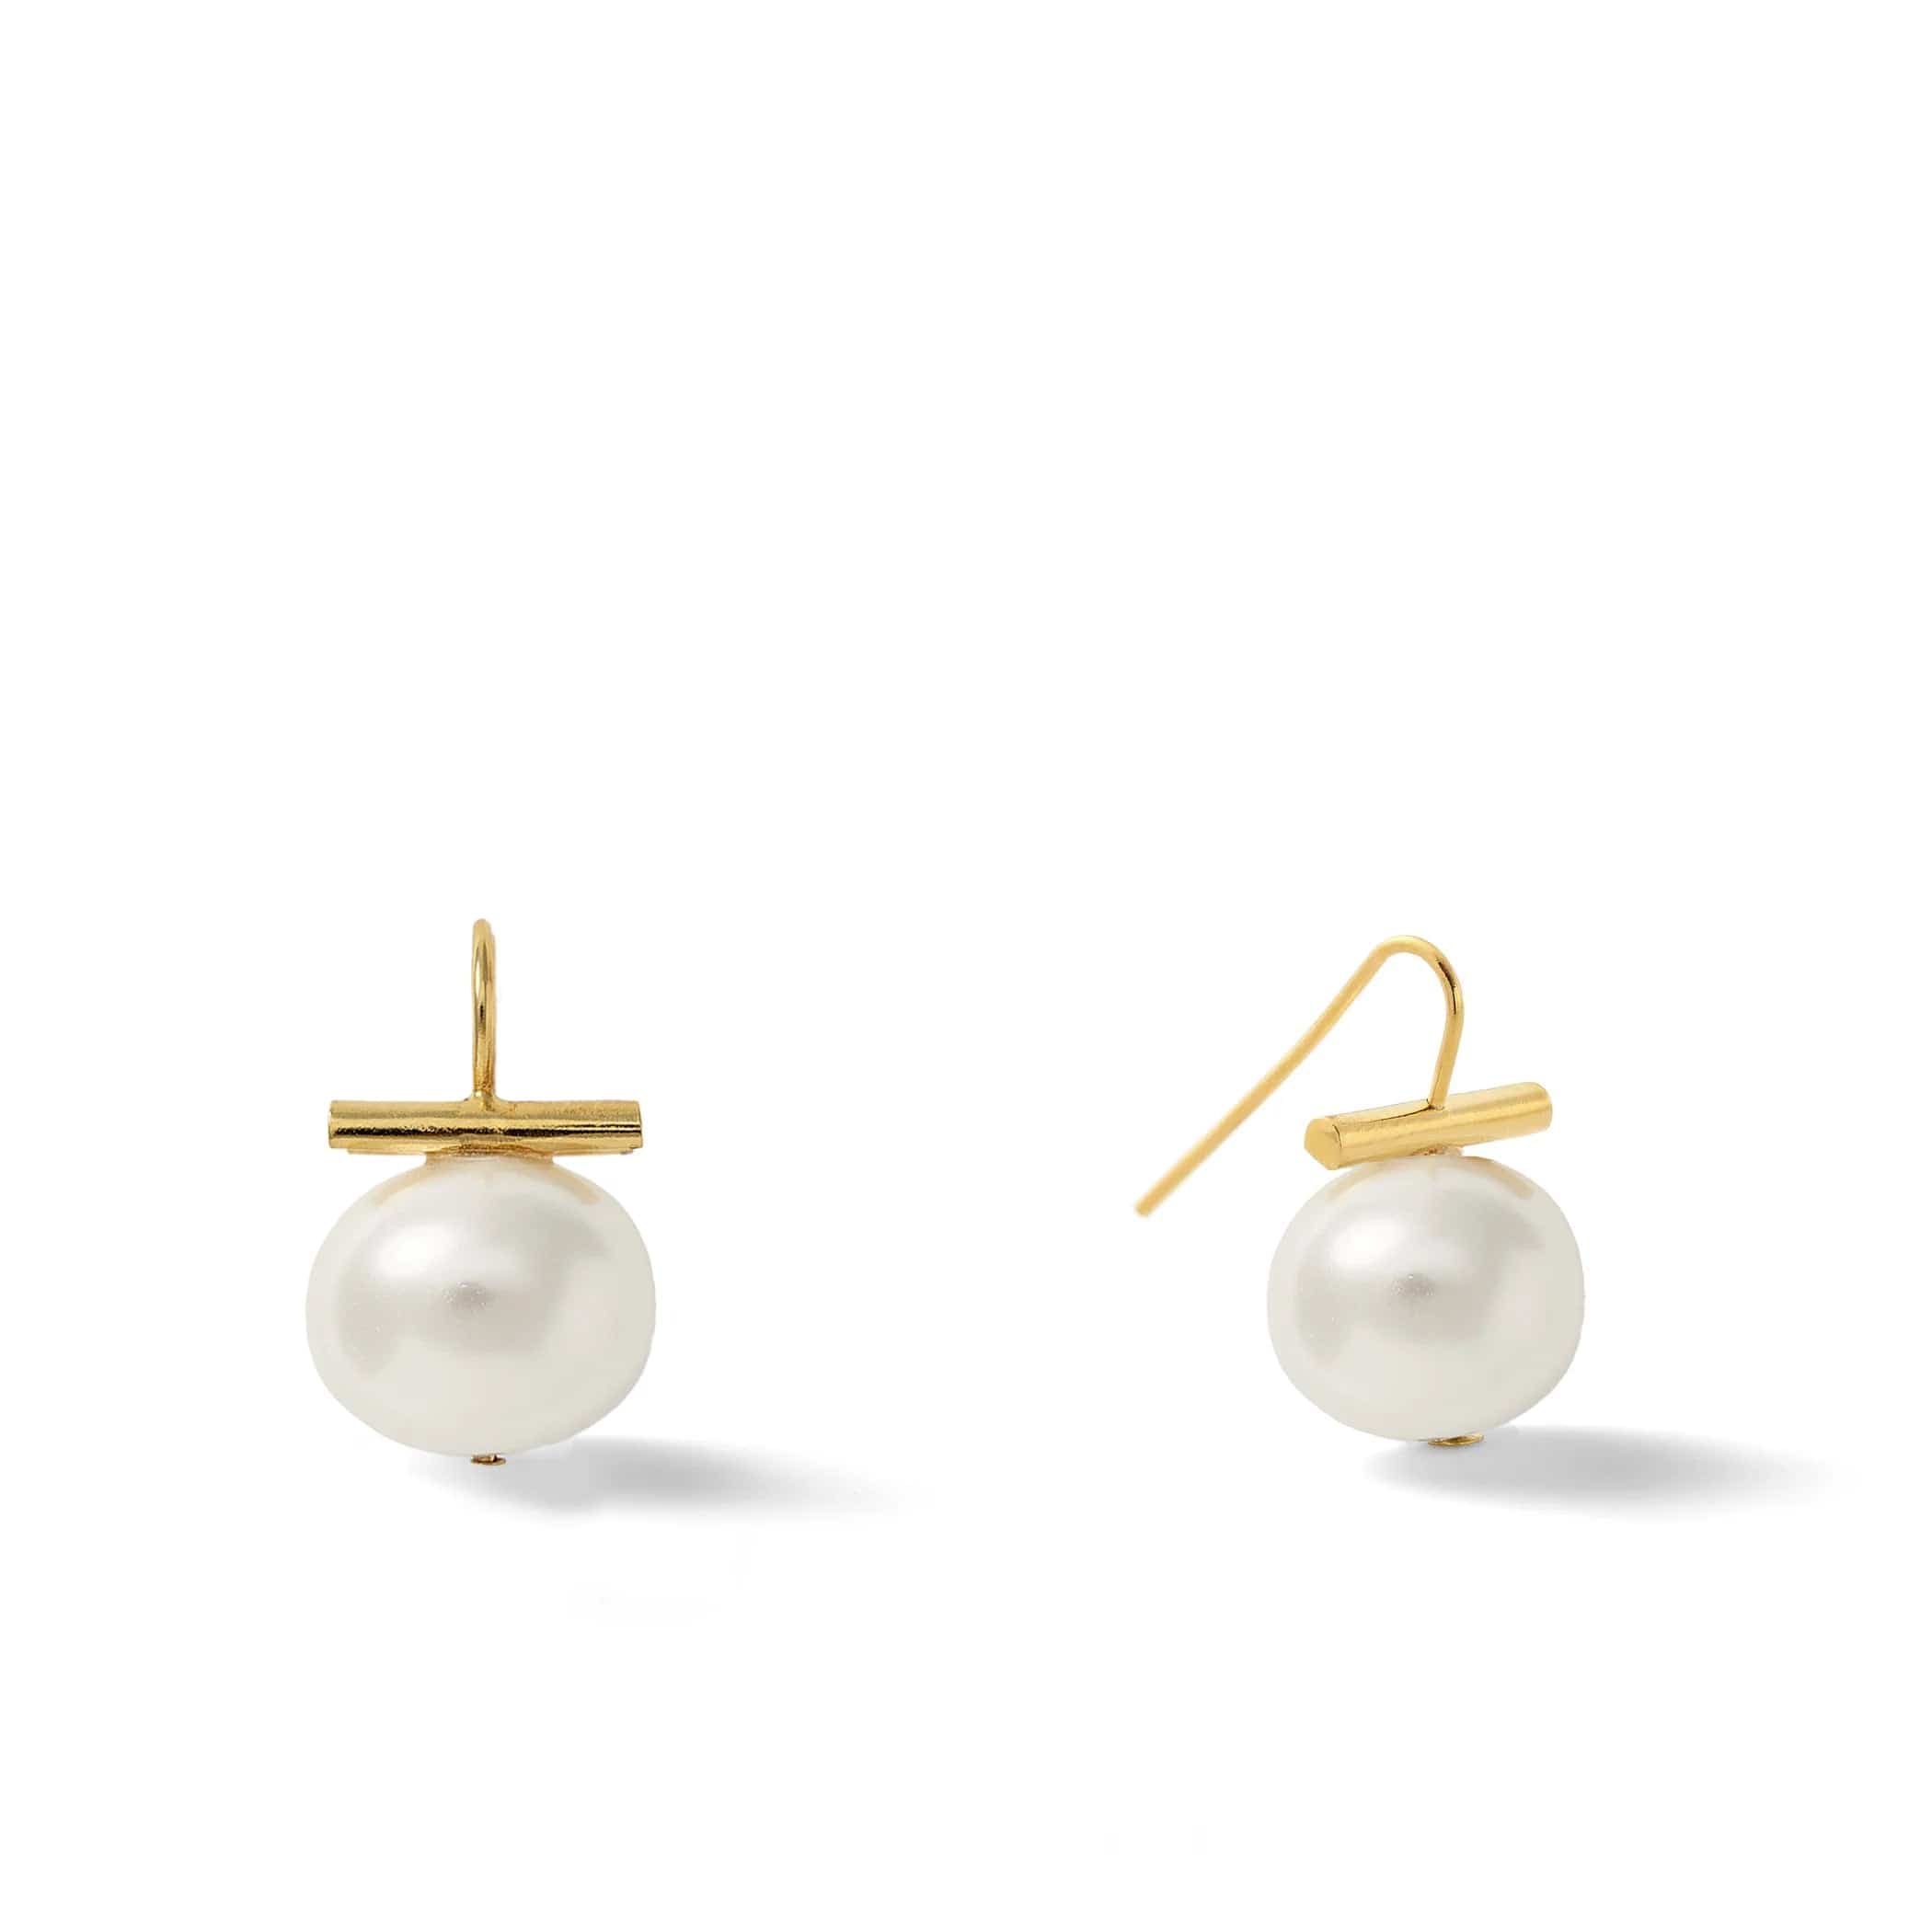 Catherine Canino Earrings Catherine Canino 14K/Brass Medium "Pebble Pearl" Wire Earrings